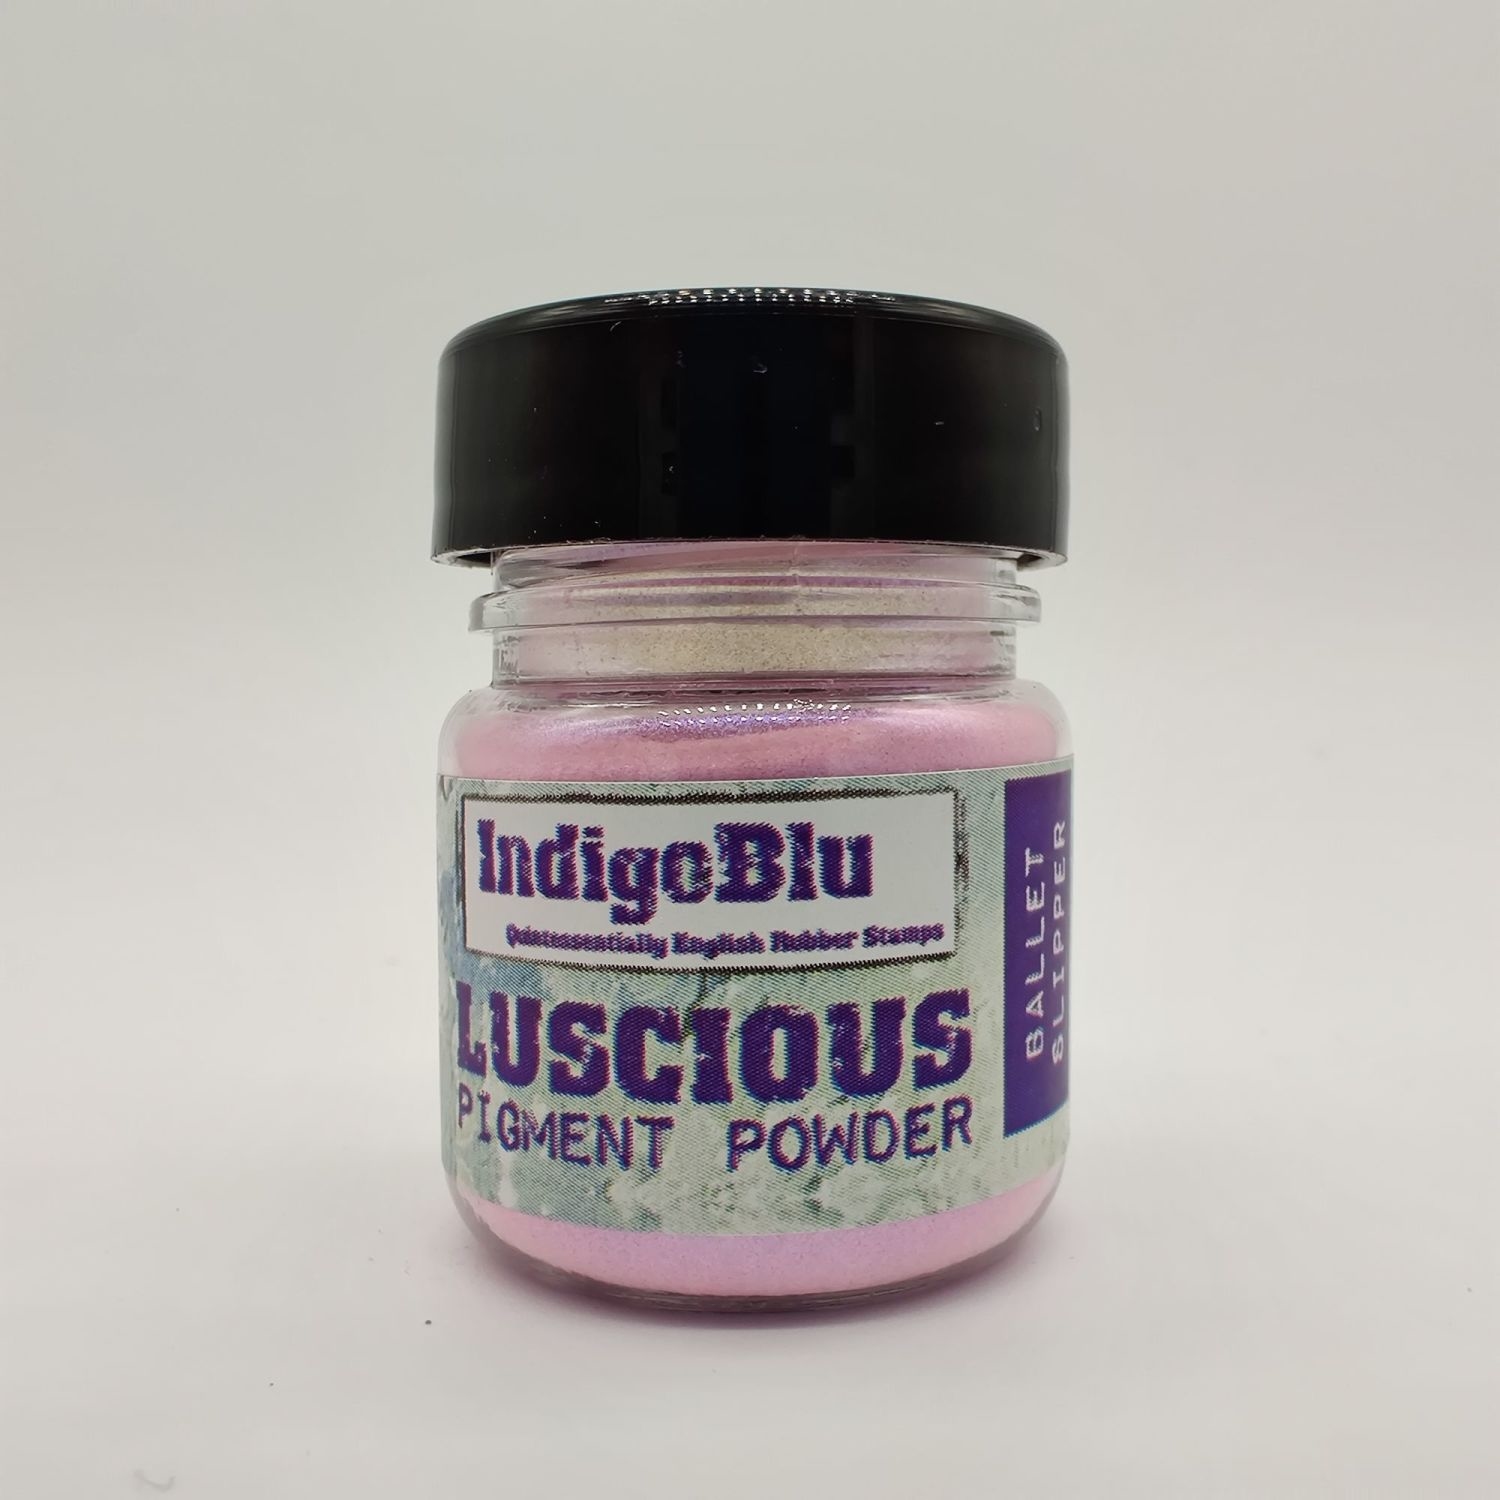 Luscious Pigment Powder | IndigoBlu | Warm Wishes | 25ml